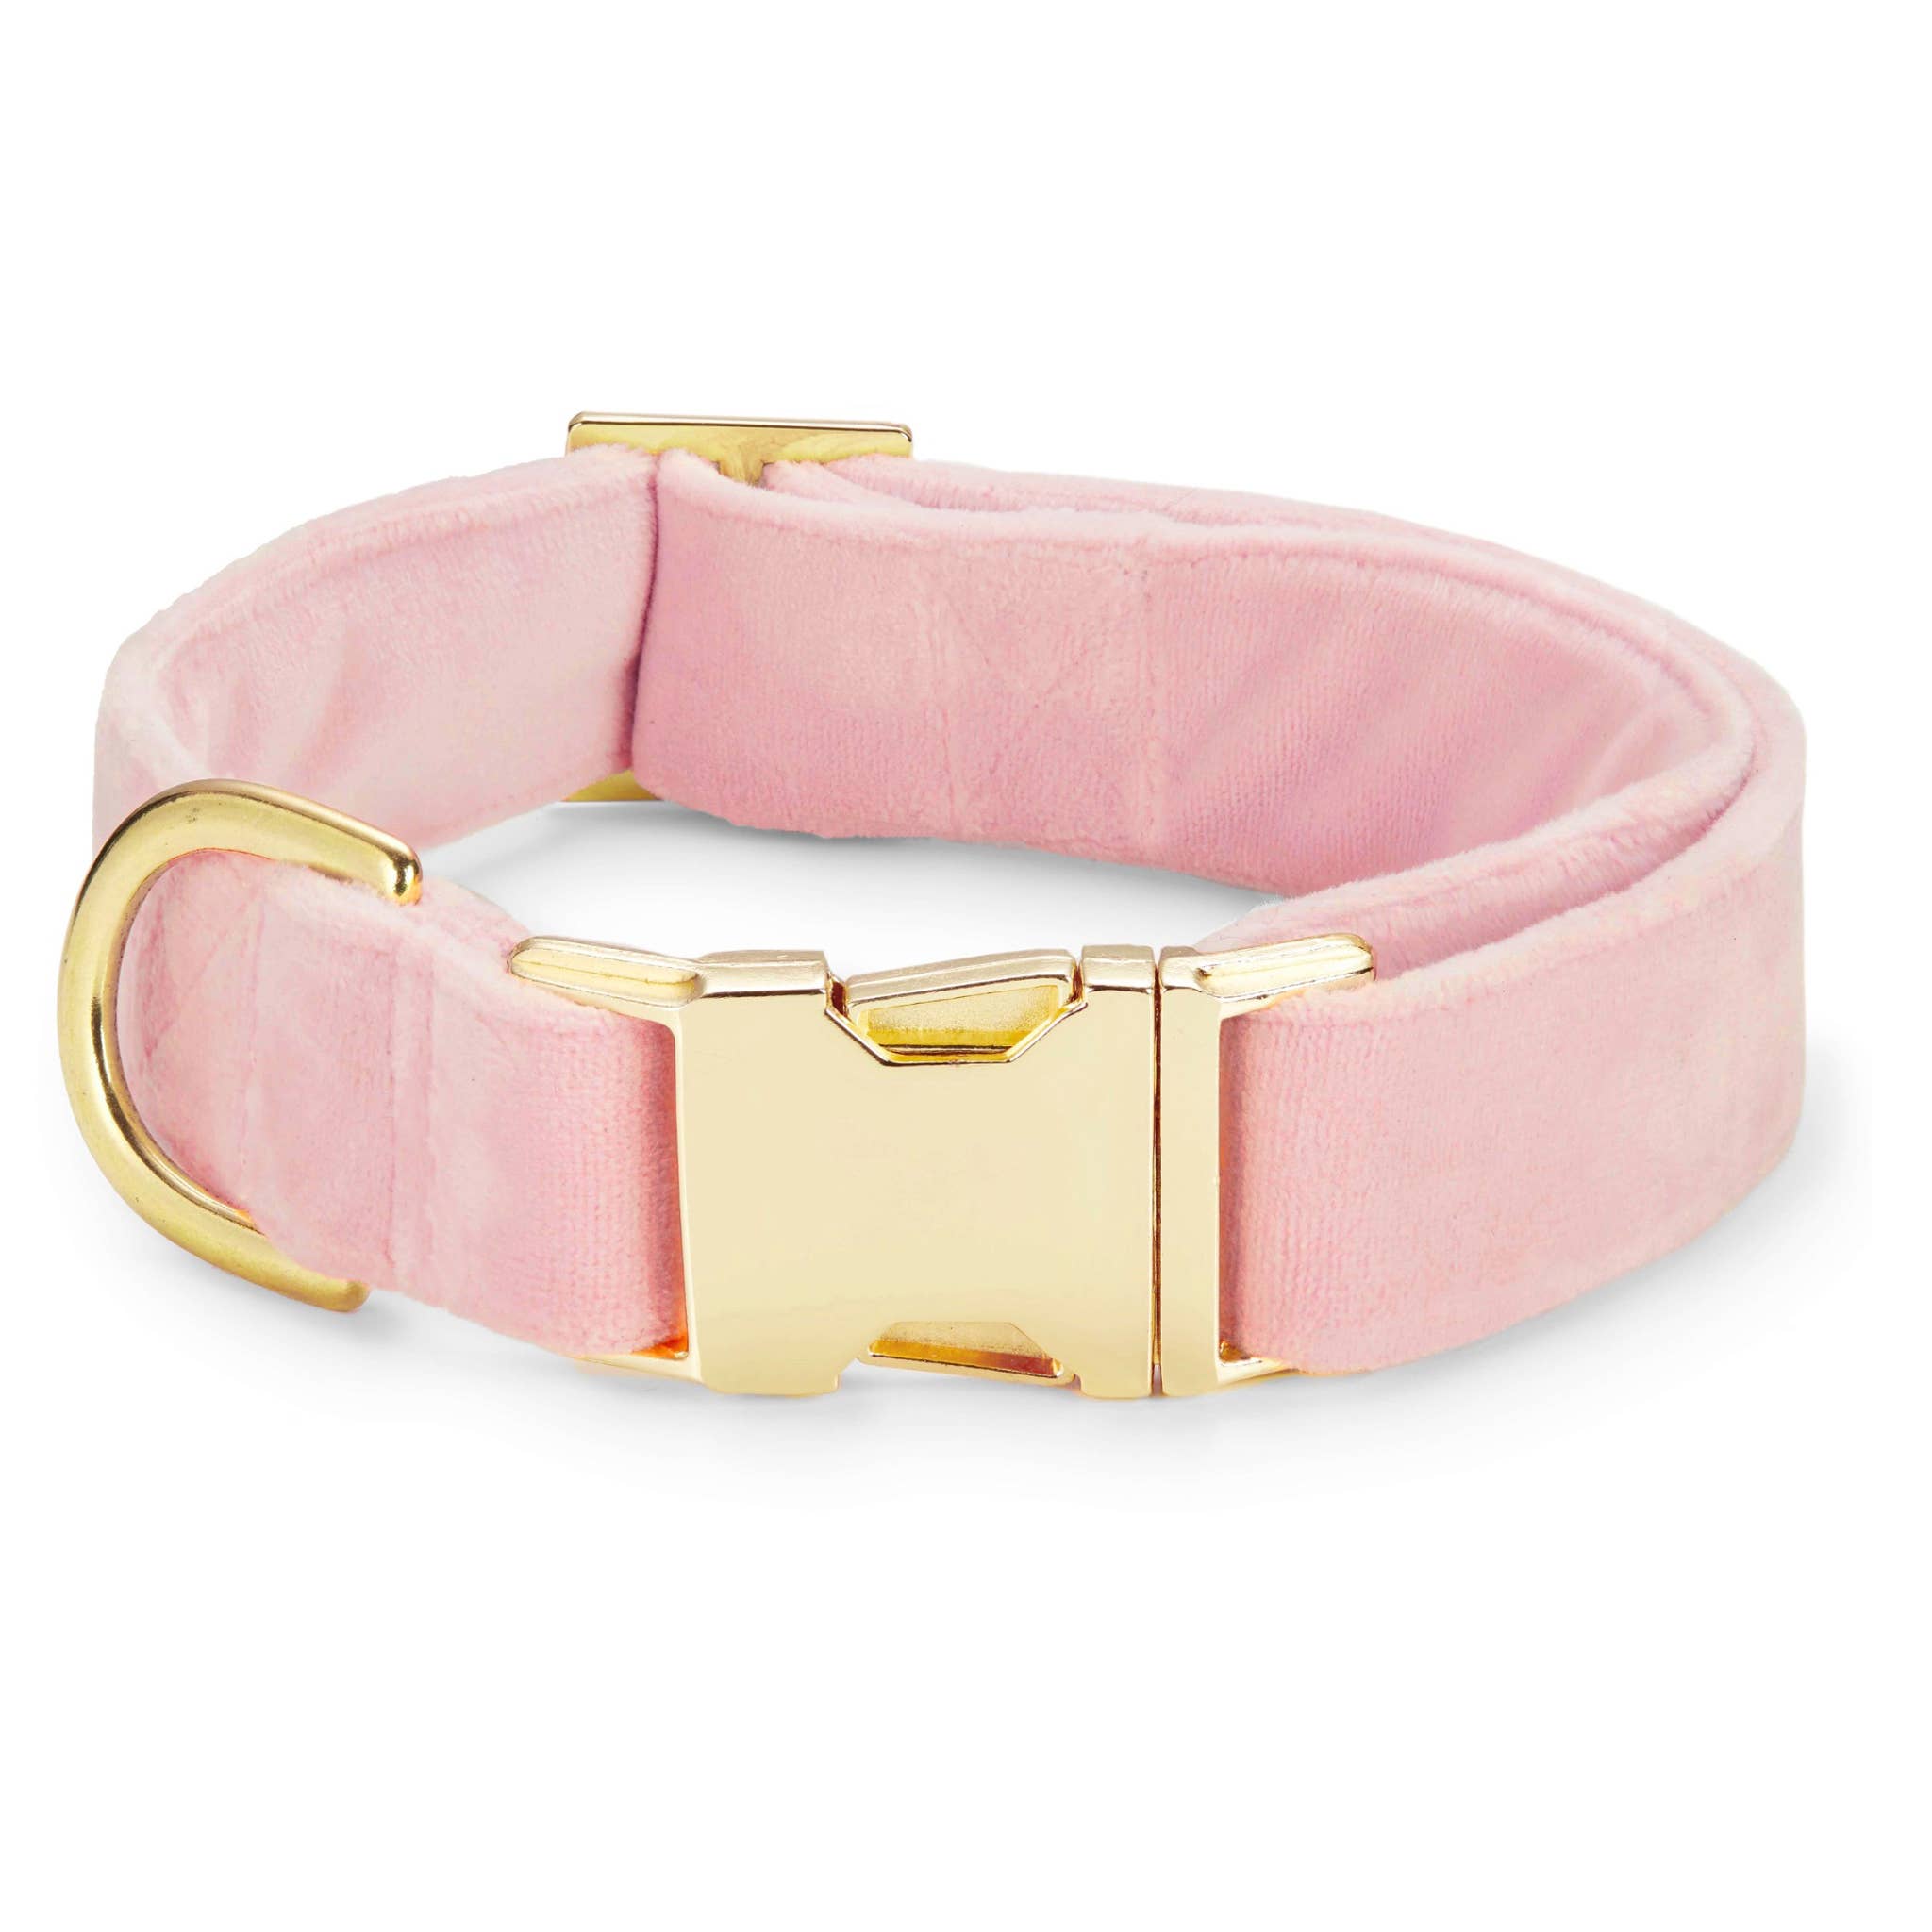 The Foggy Dog Blush Pink Velvet Dog Collar